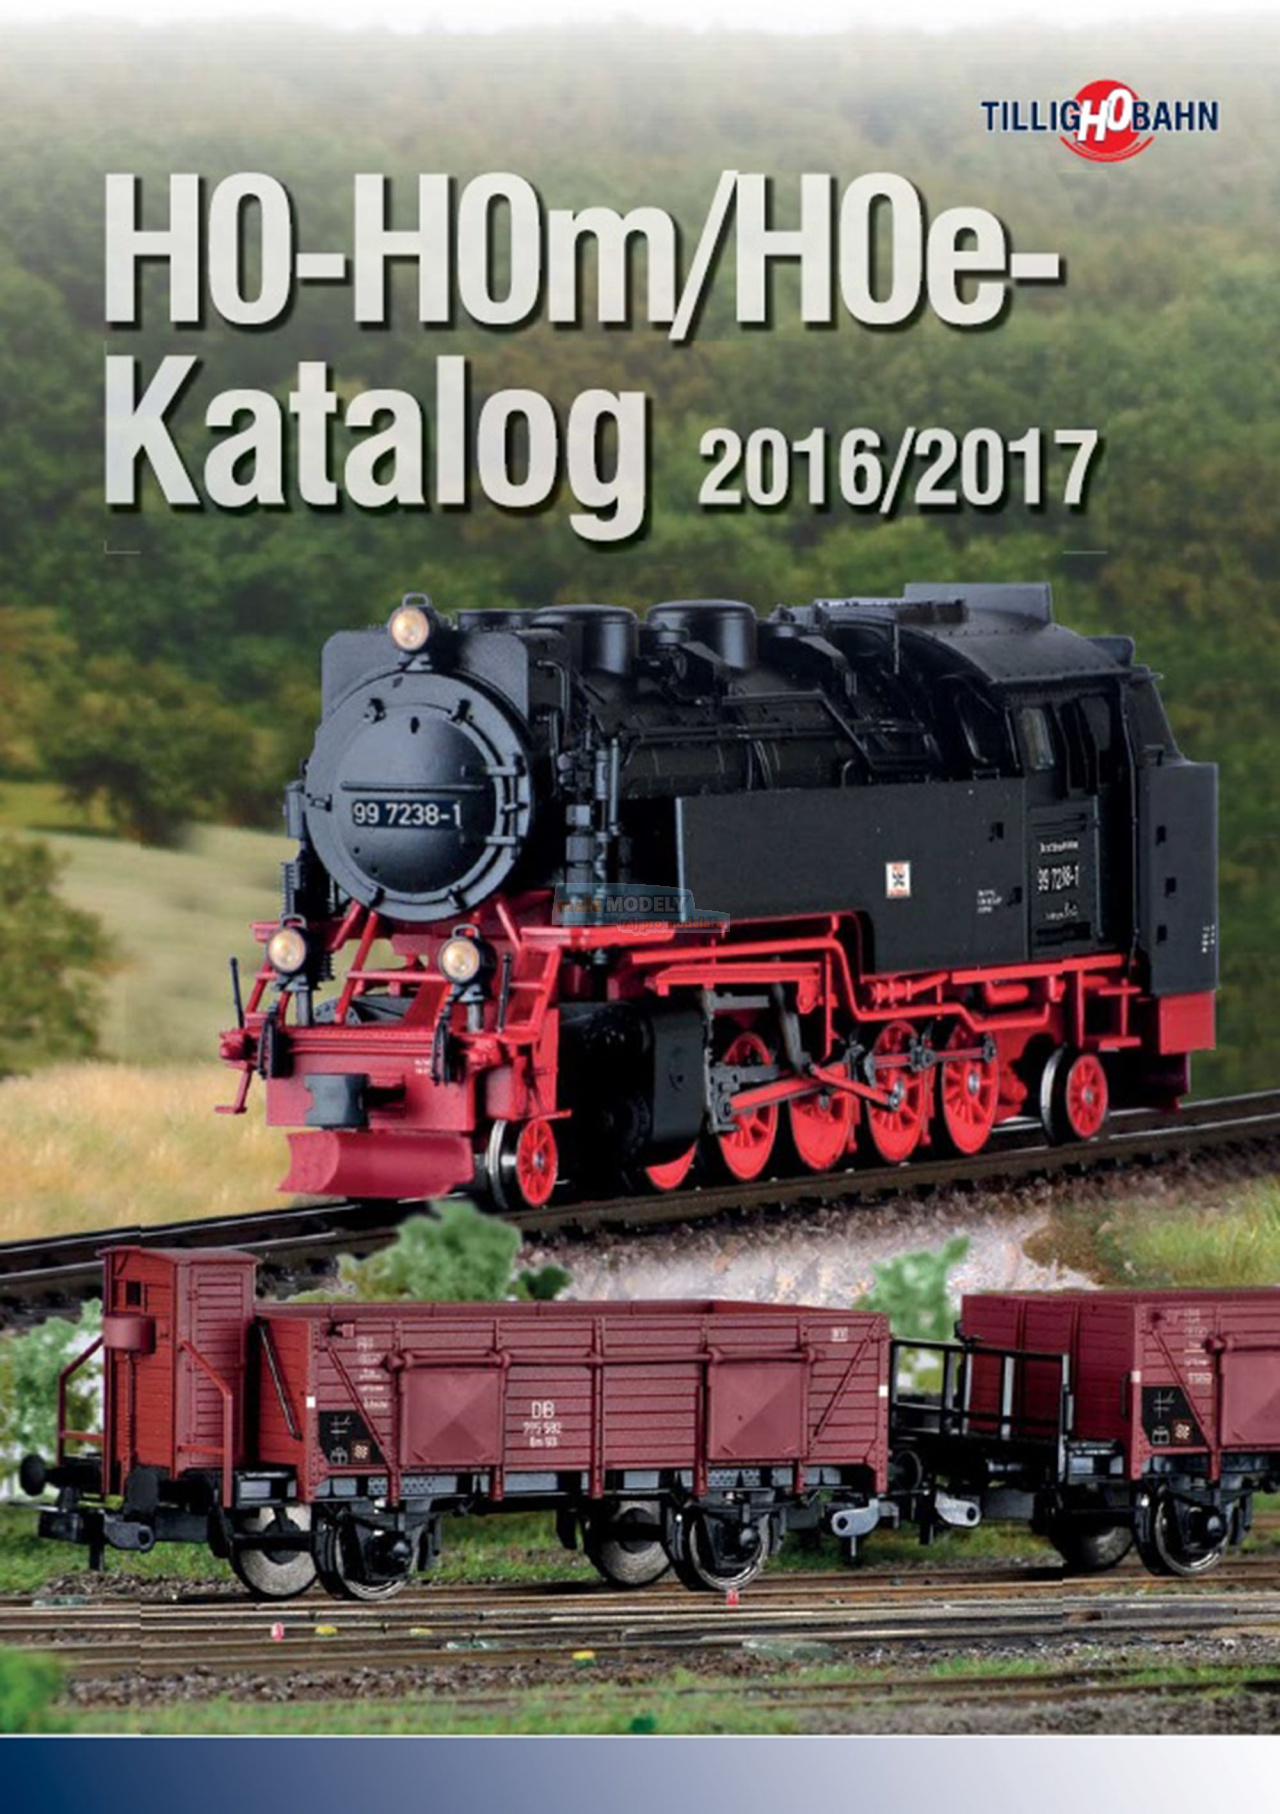 H0-H0m/H0e-Katalog 2016/2017